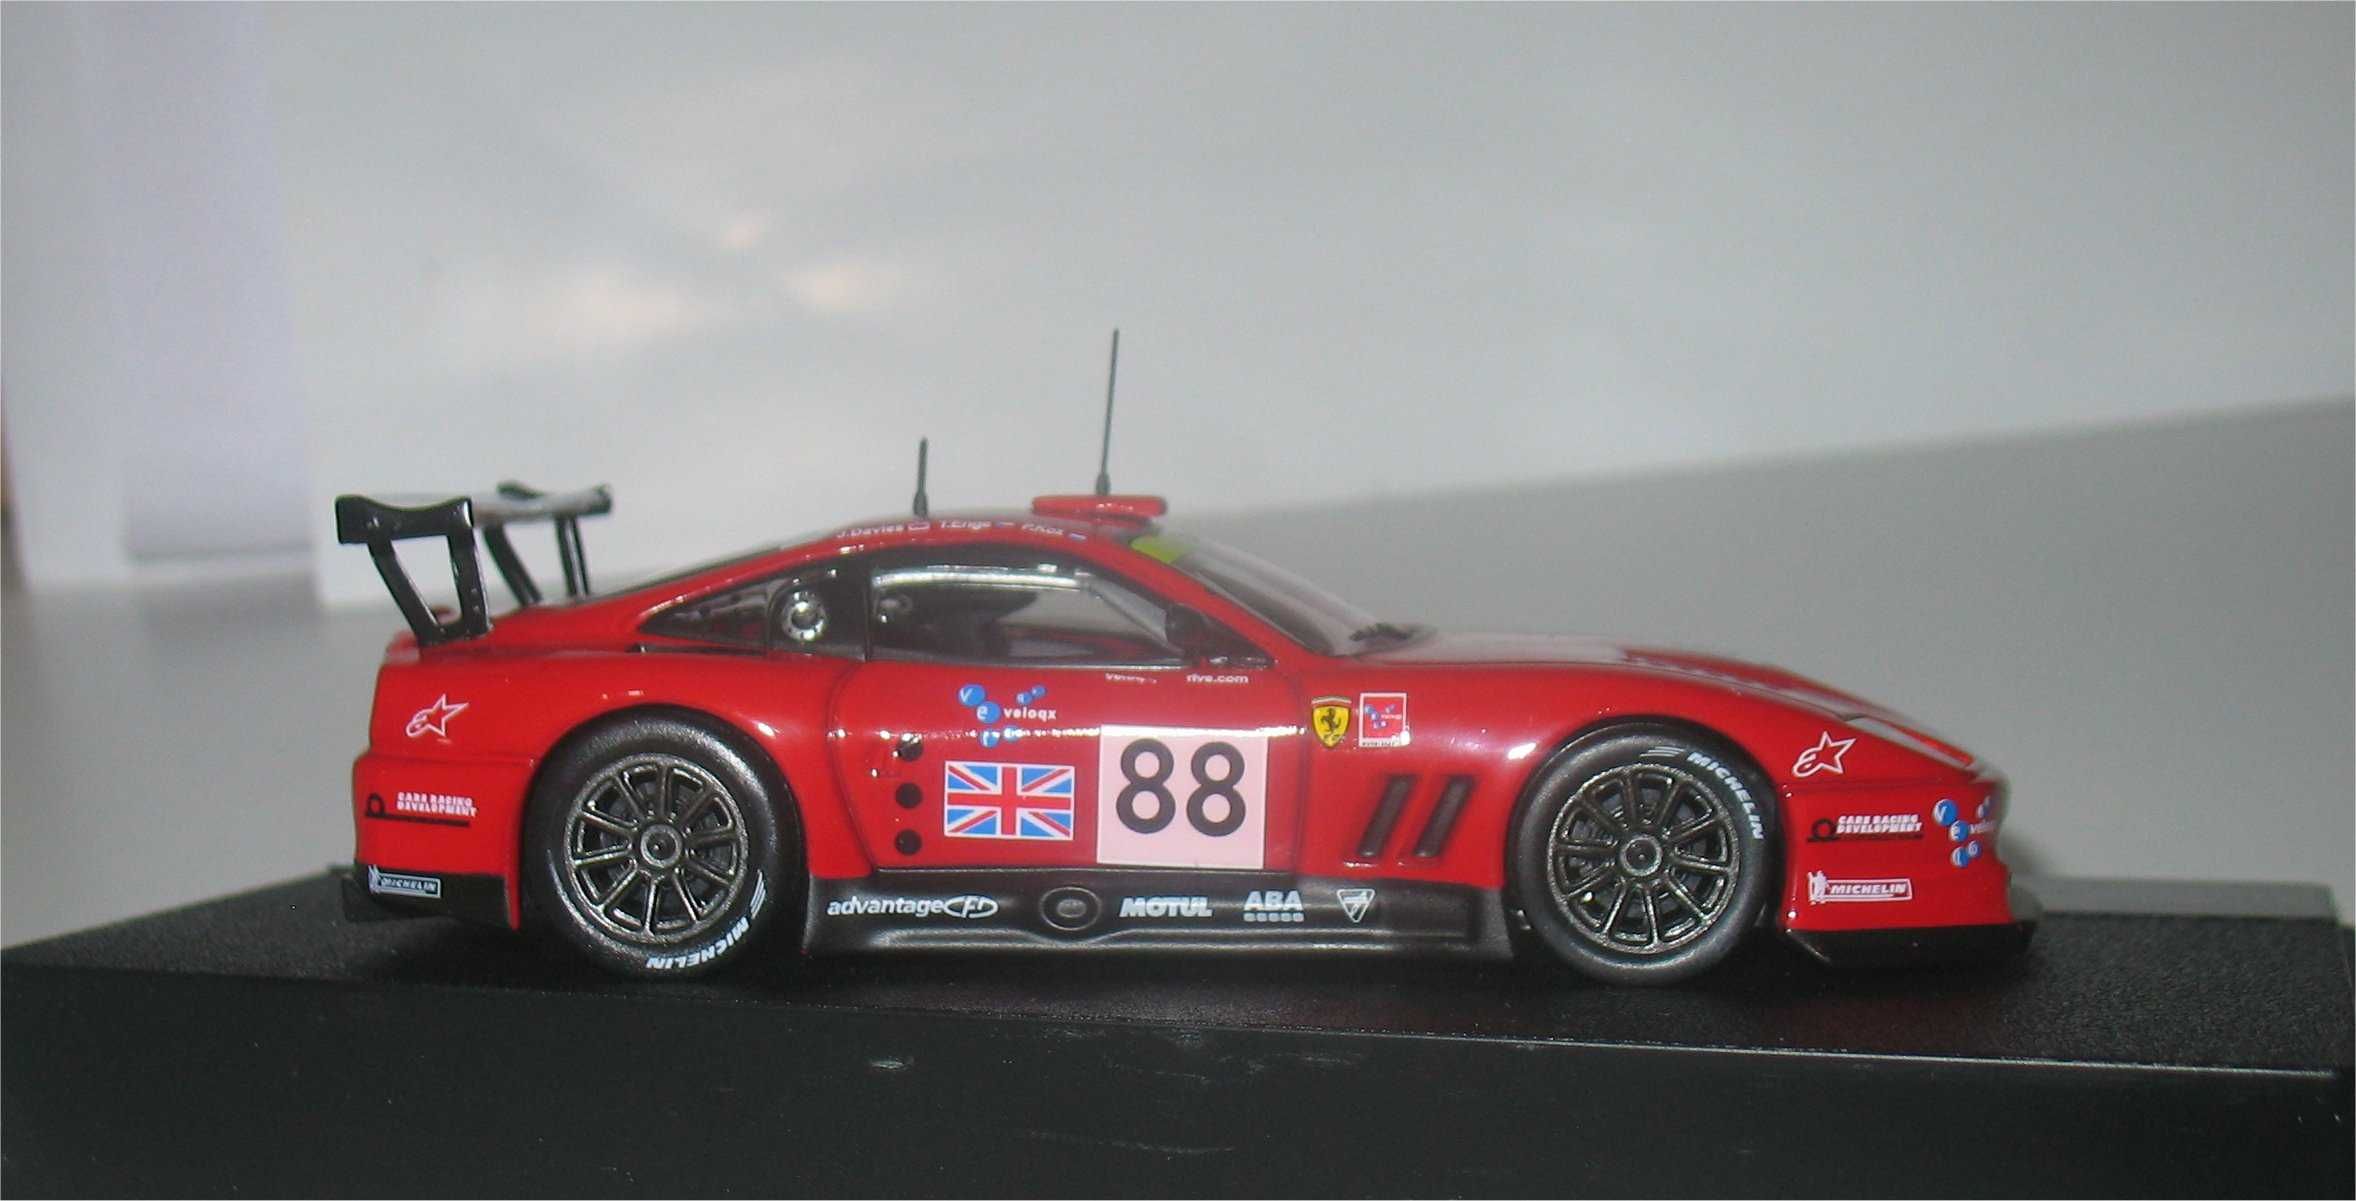 Ferrari 550 Maranello - Vencedor GTS Le Mans 2003 - Enge, Kox, Davies